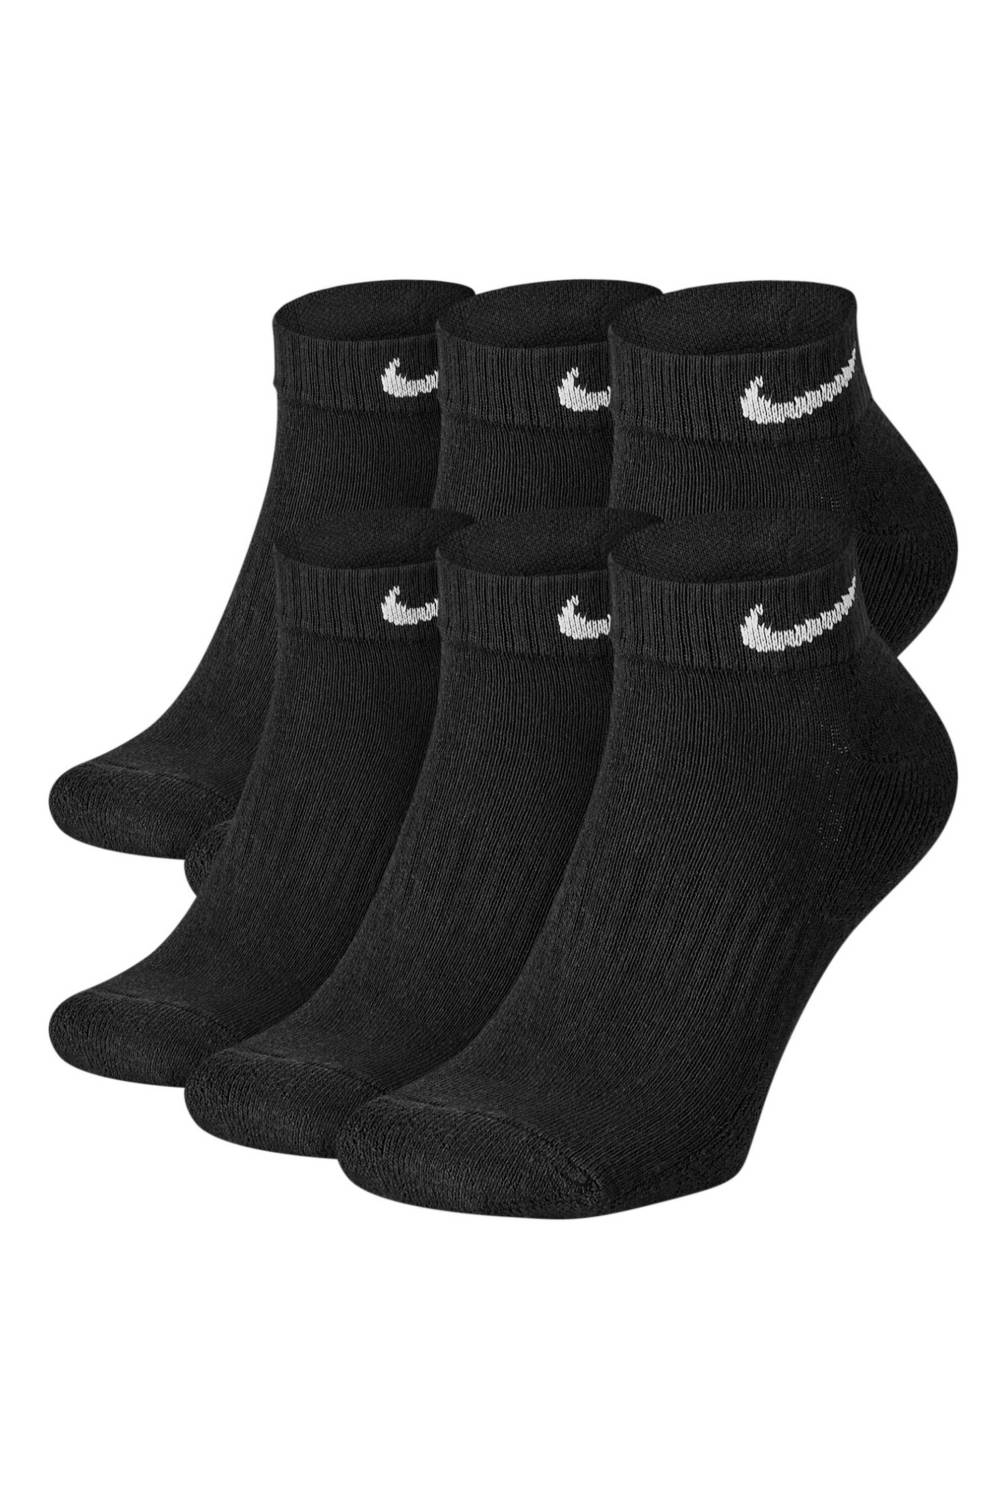 Pack de 6 calcetines cortos hombre de calidad